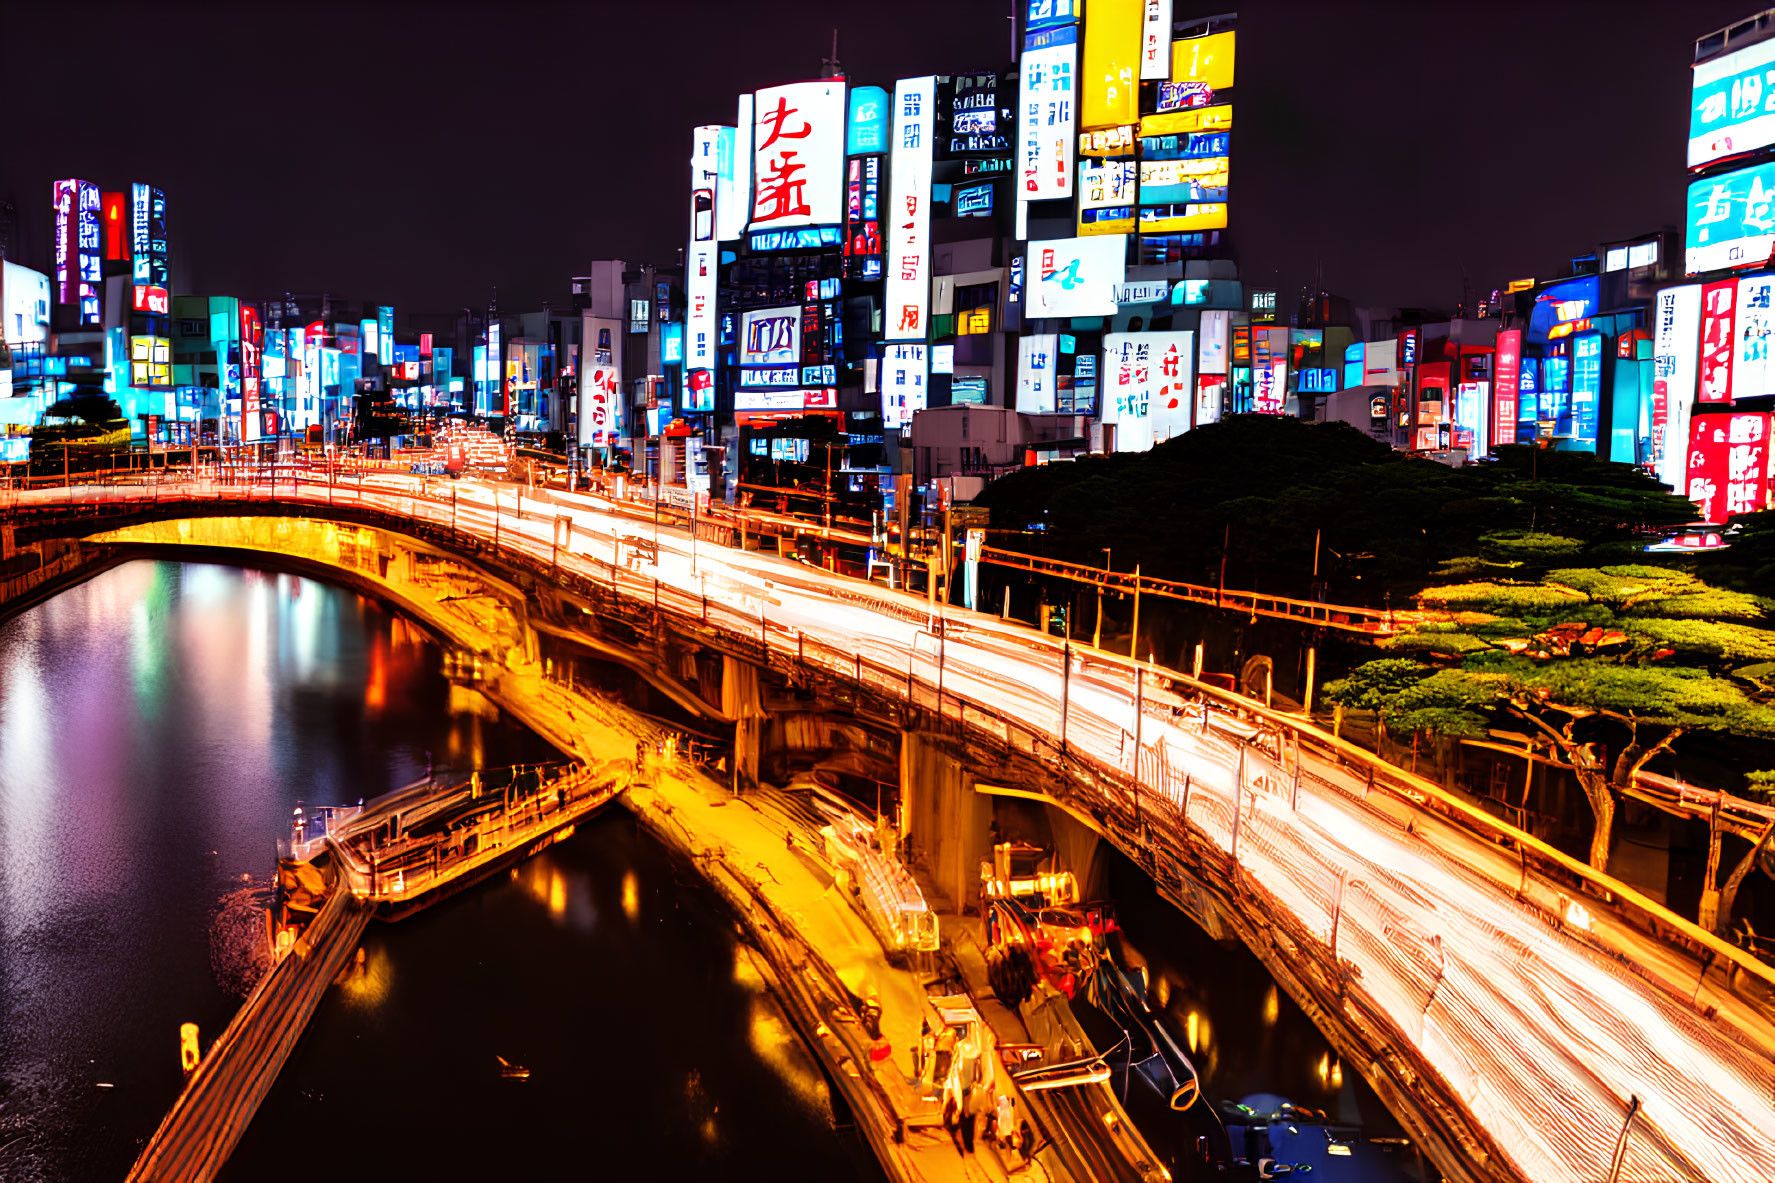 Cityscape at Night: River, Billboards, Bridge Illuminated